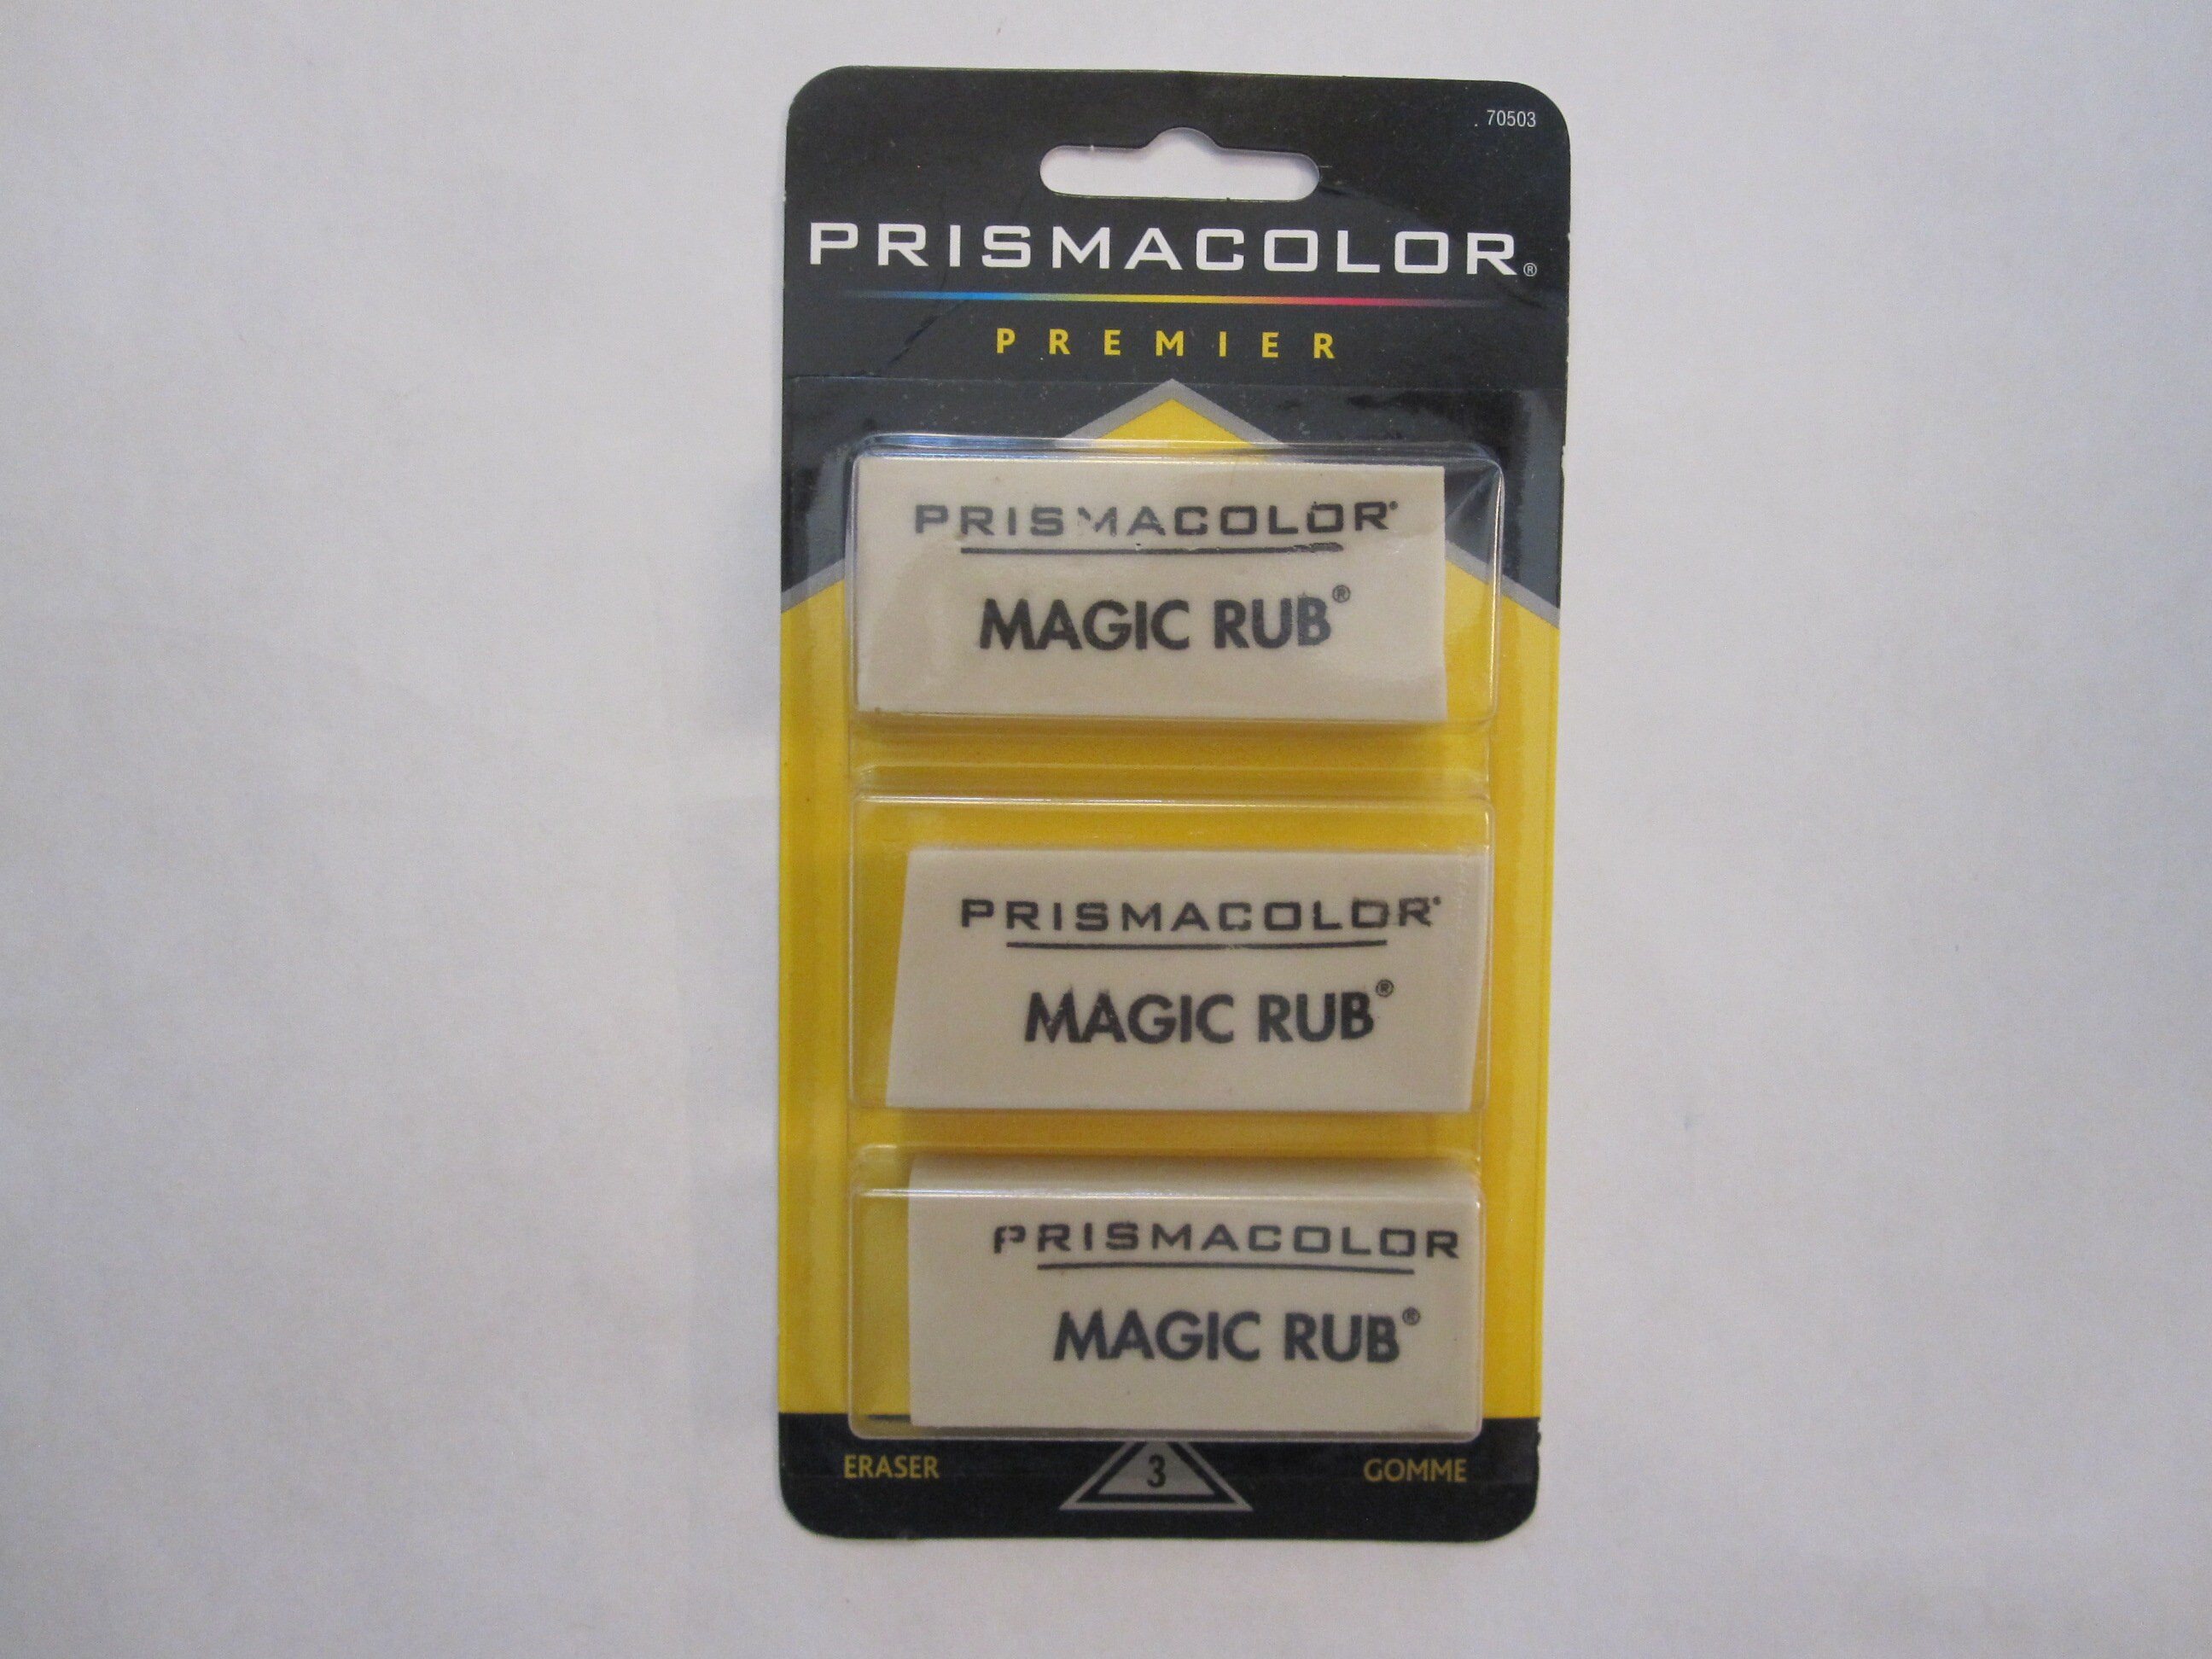 Lot of 2 Prismacolor Magic Rub Erasers Latex-free Vinyl 73201 NEW